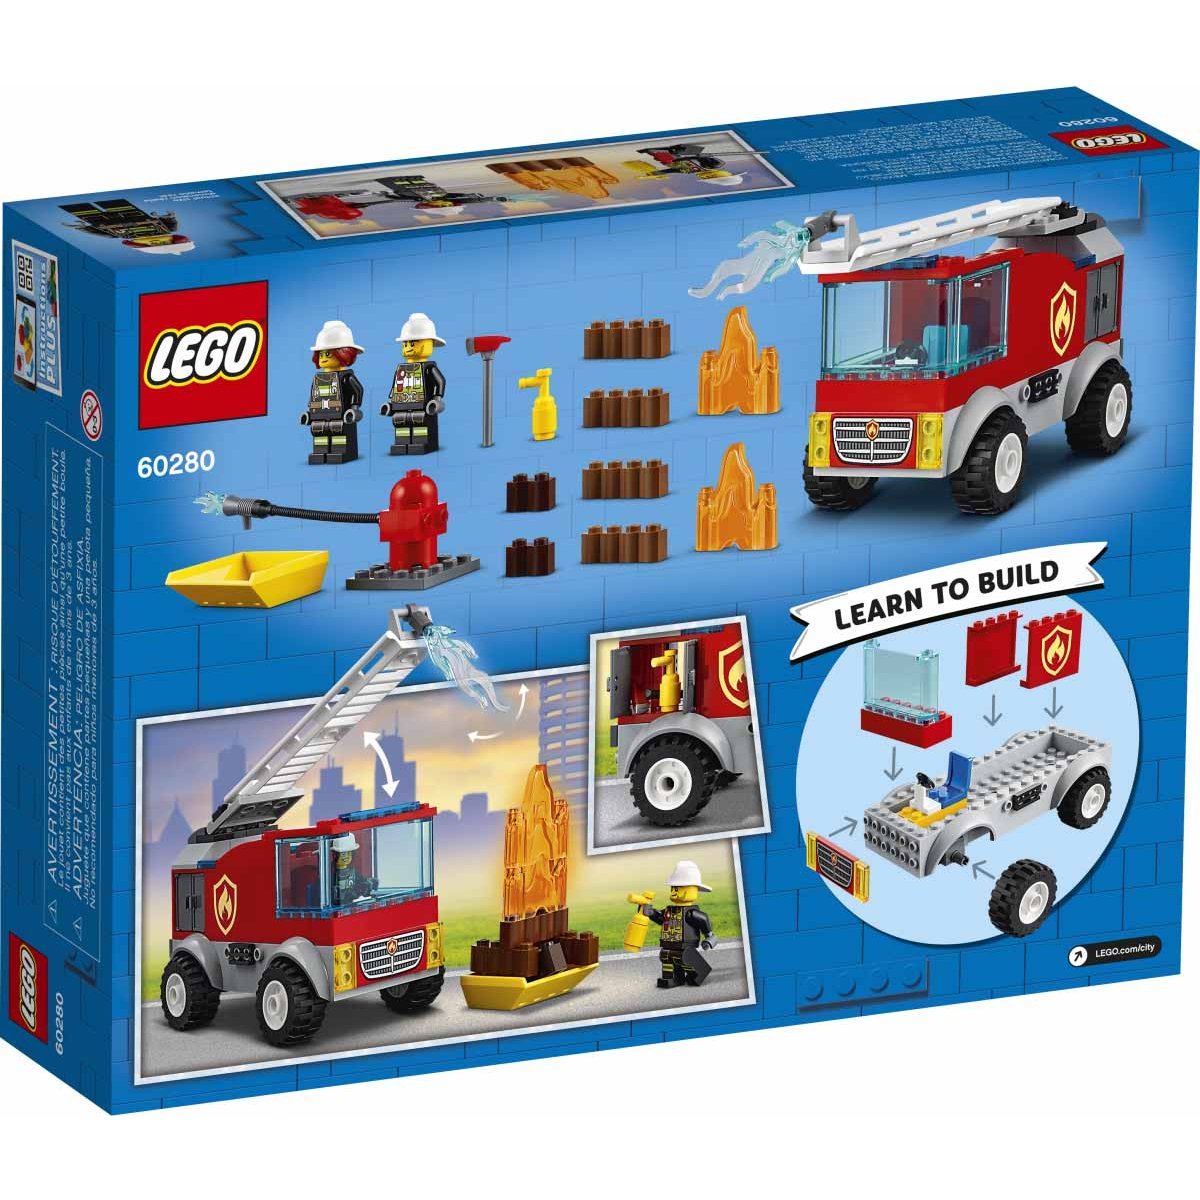 Camión de Bomberos con Escalera Lego City